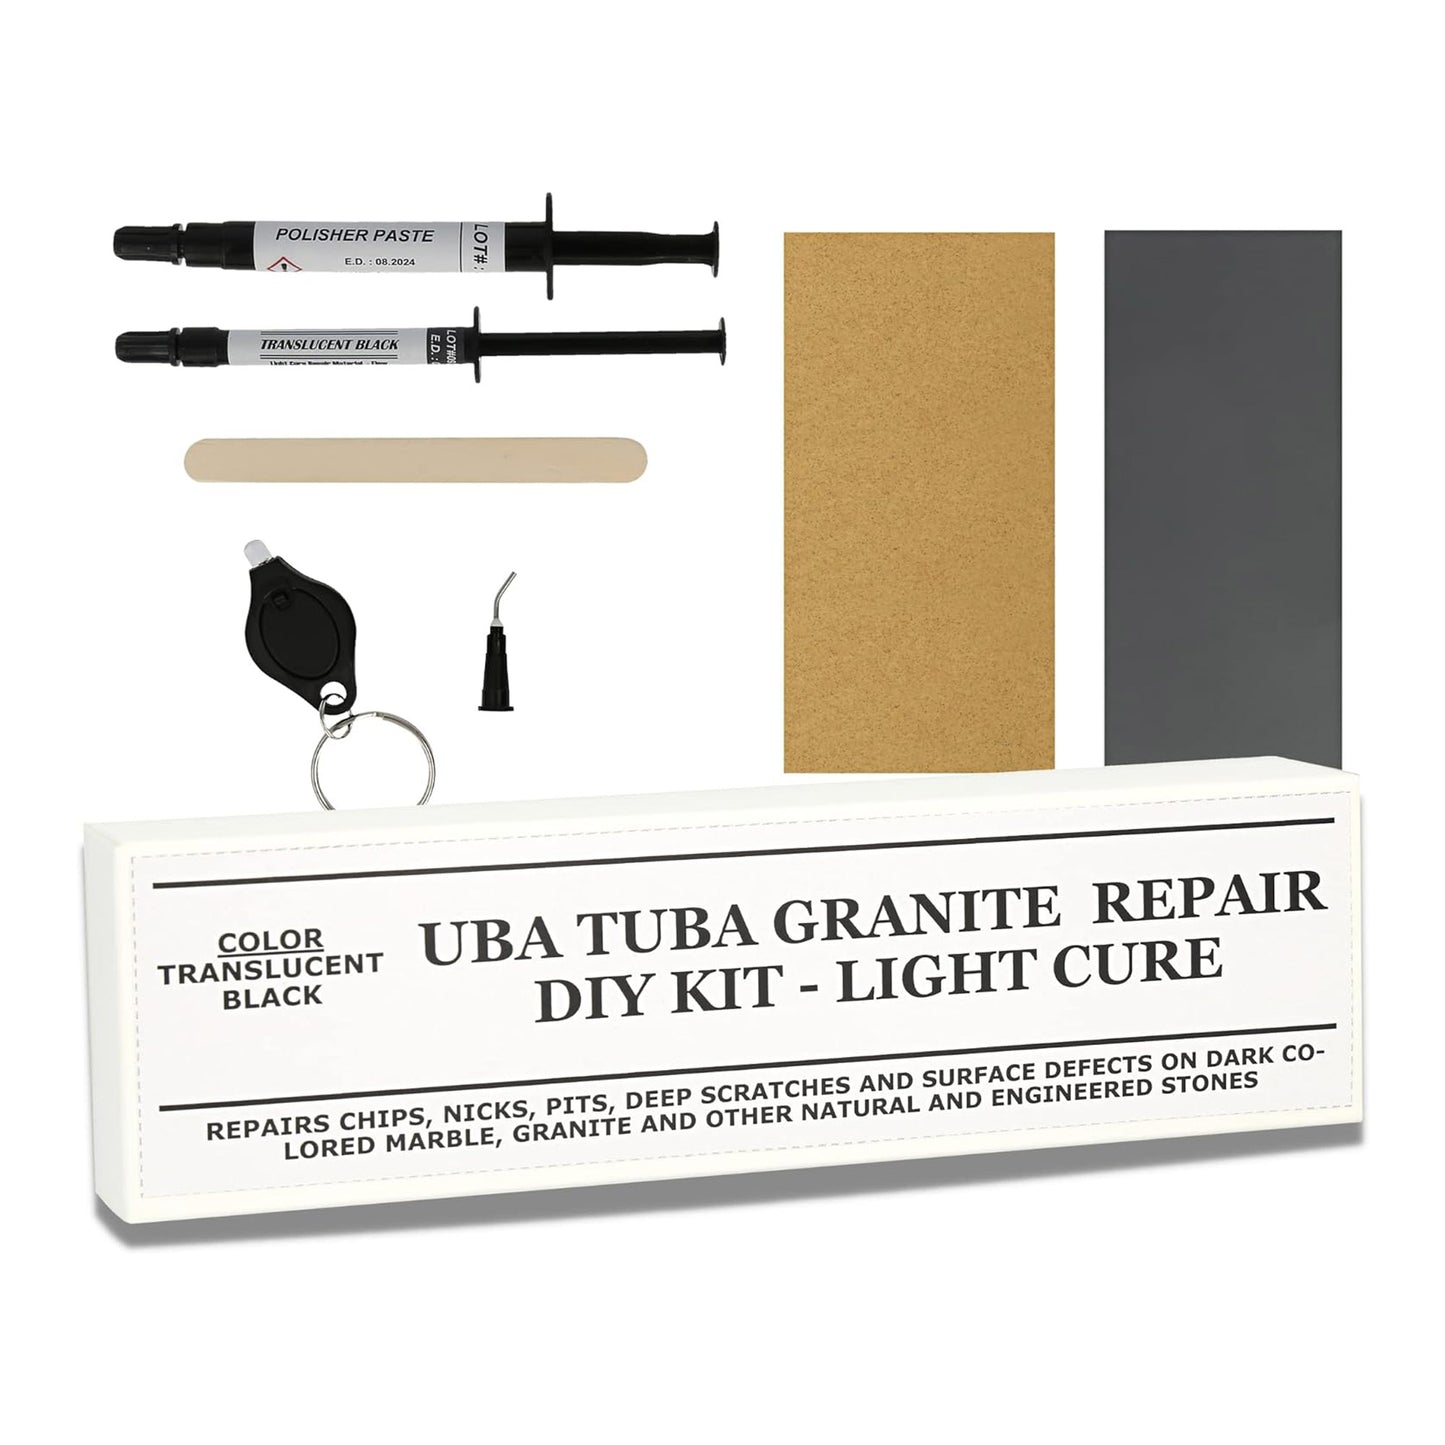 Granite Repair Kit (Black, UBA TUBA) I Suitable for Most Repairs I Also for Tile, Countertop, Fiberglass & Ceramic Surfaces I Fix Broken Chips & Cracks in Minutes